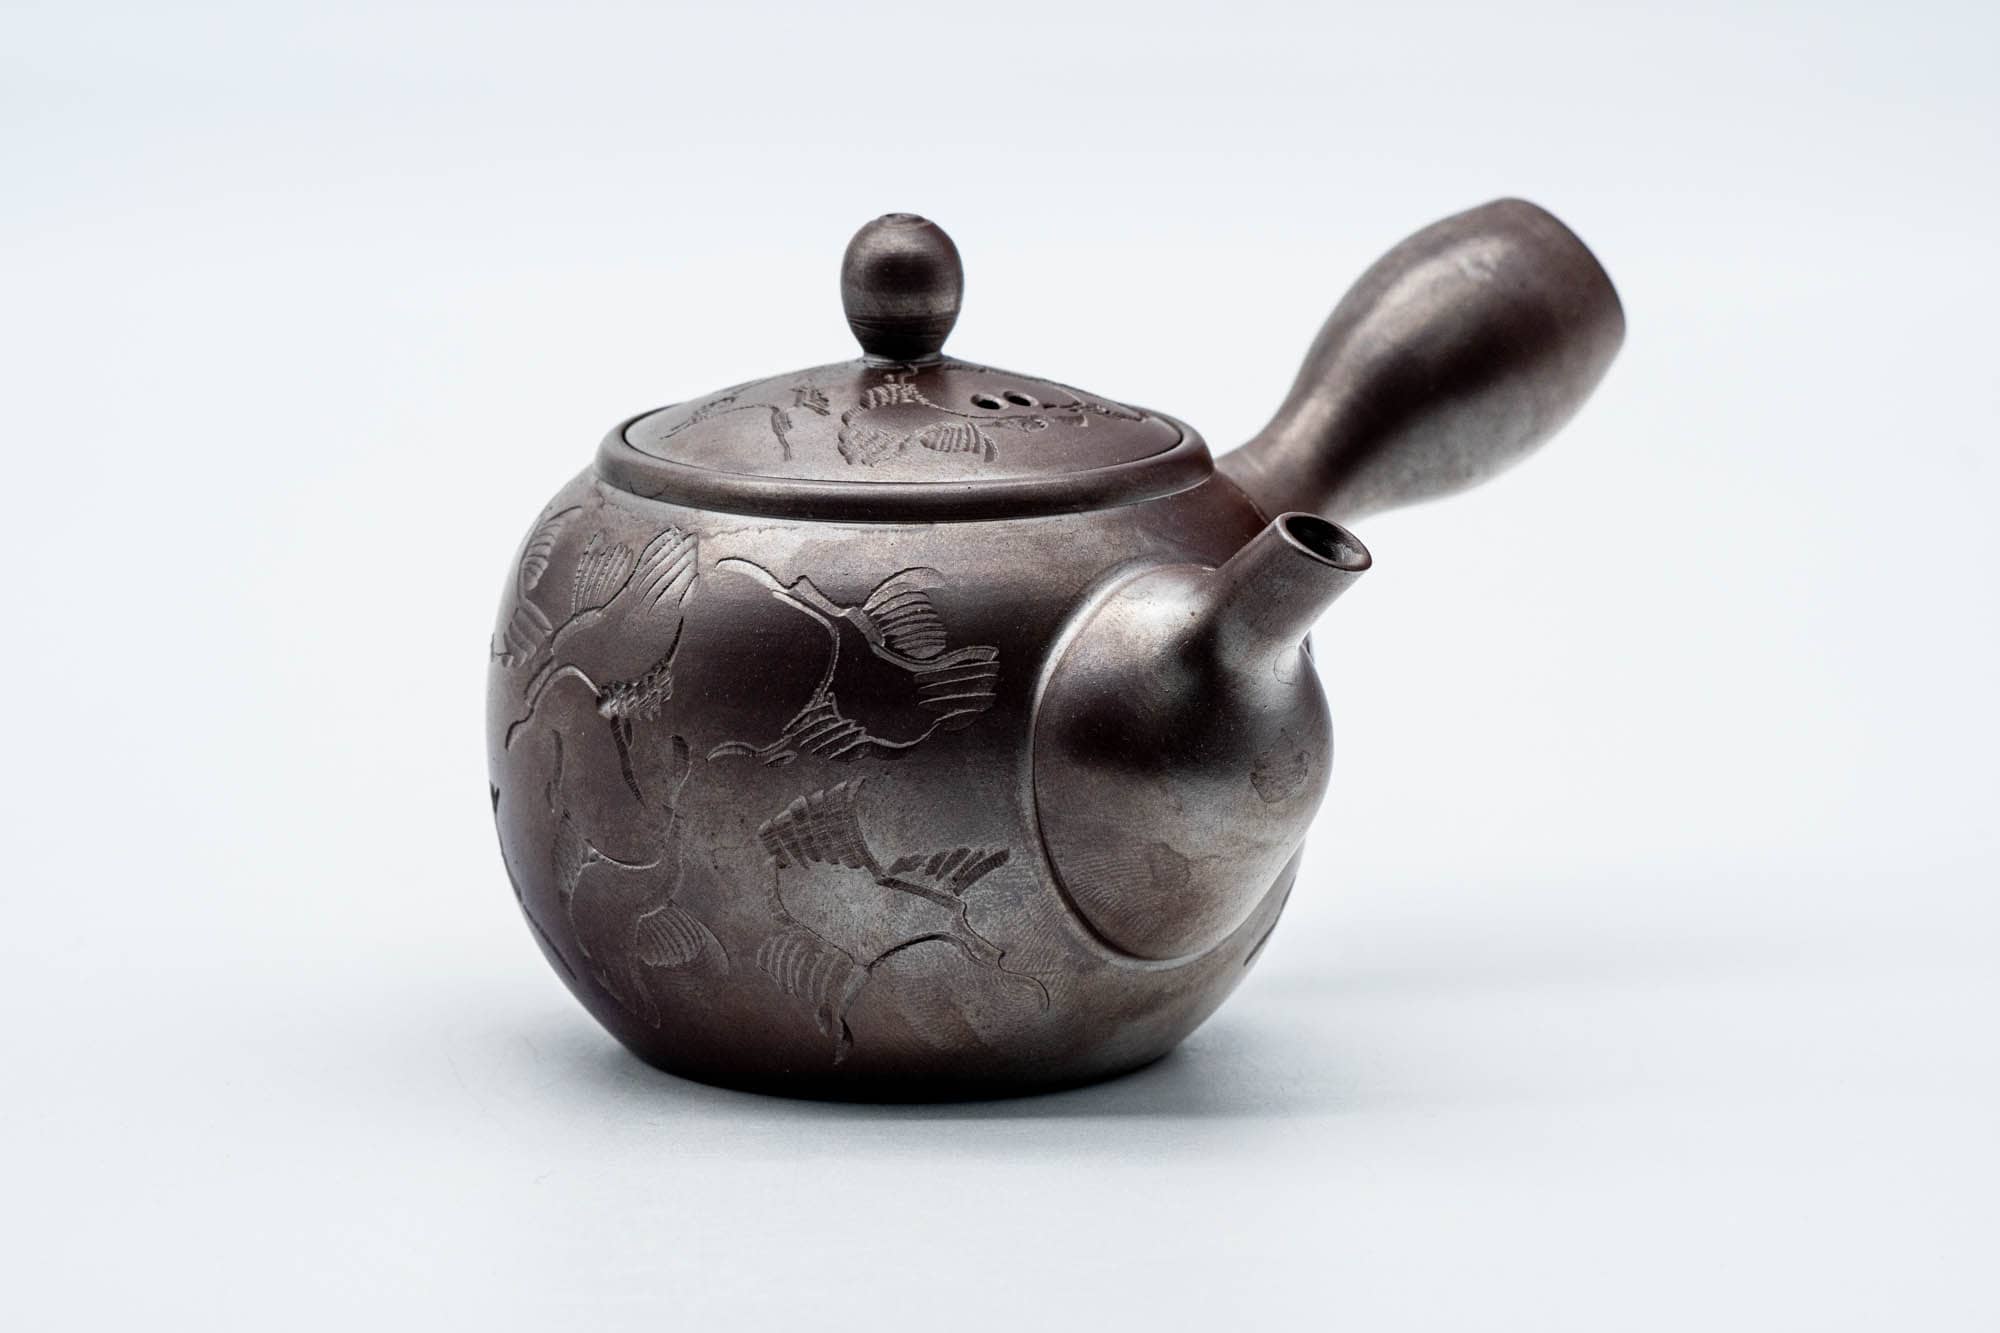 Japanese Kyusu - Engraved Birds Banko-yaki Ceramic Teapot - 150ml